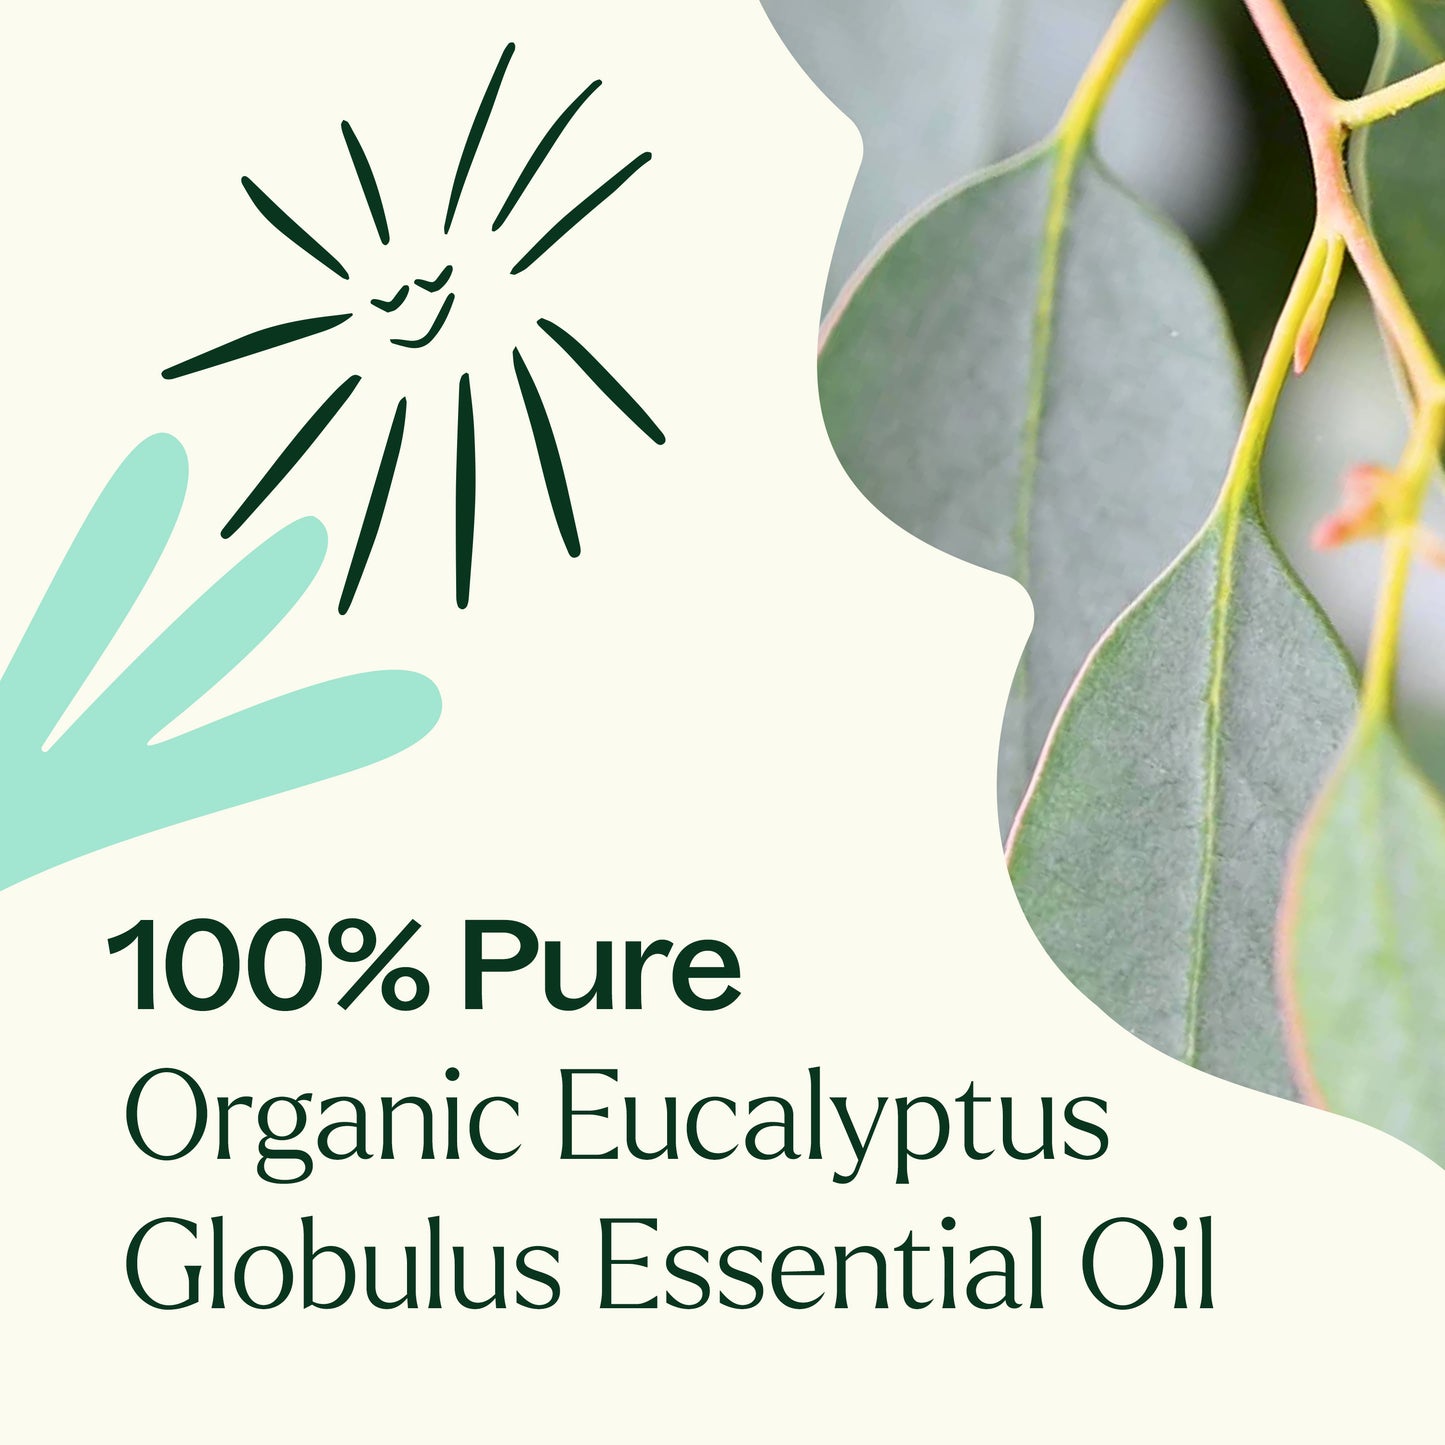 100% Pure Organic Eucalyptus Globulus Essential Oil